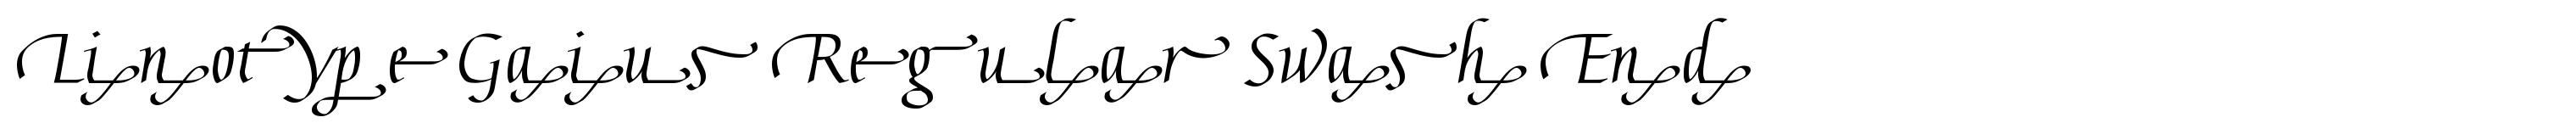 Linotype Gaius Regular Swash End